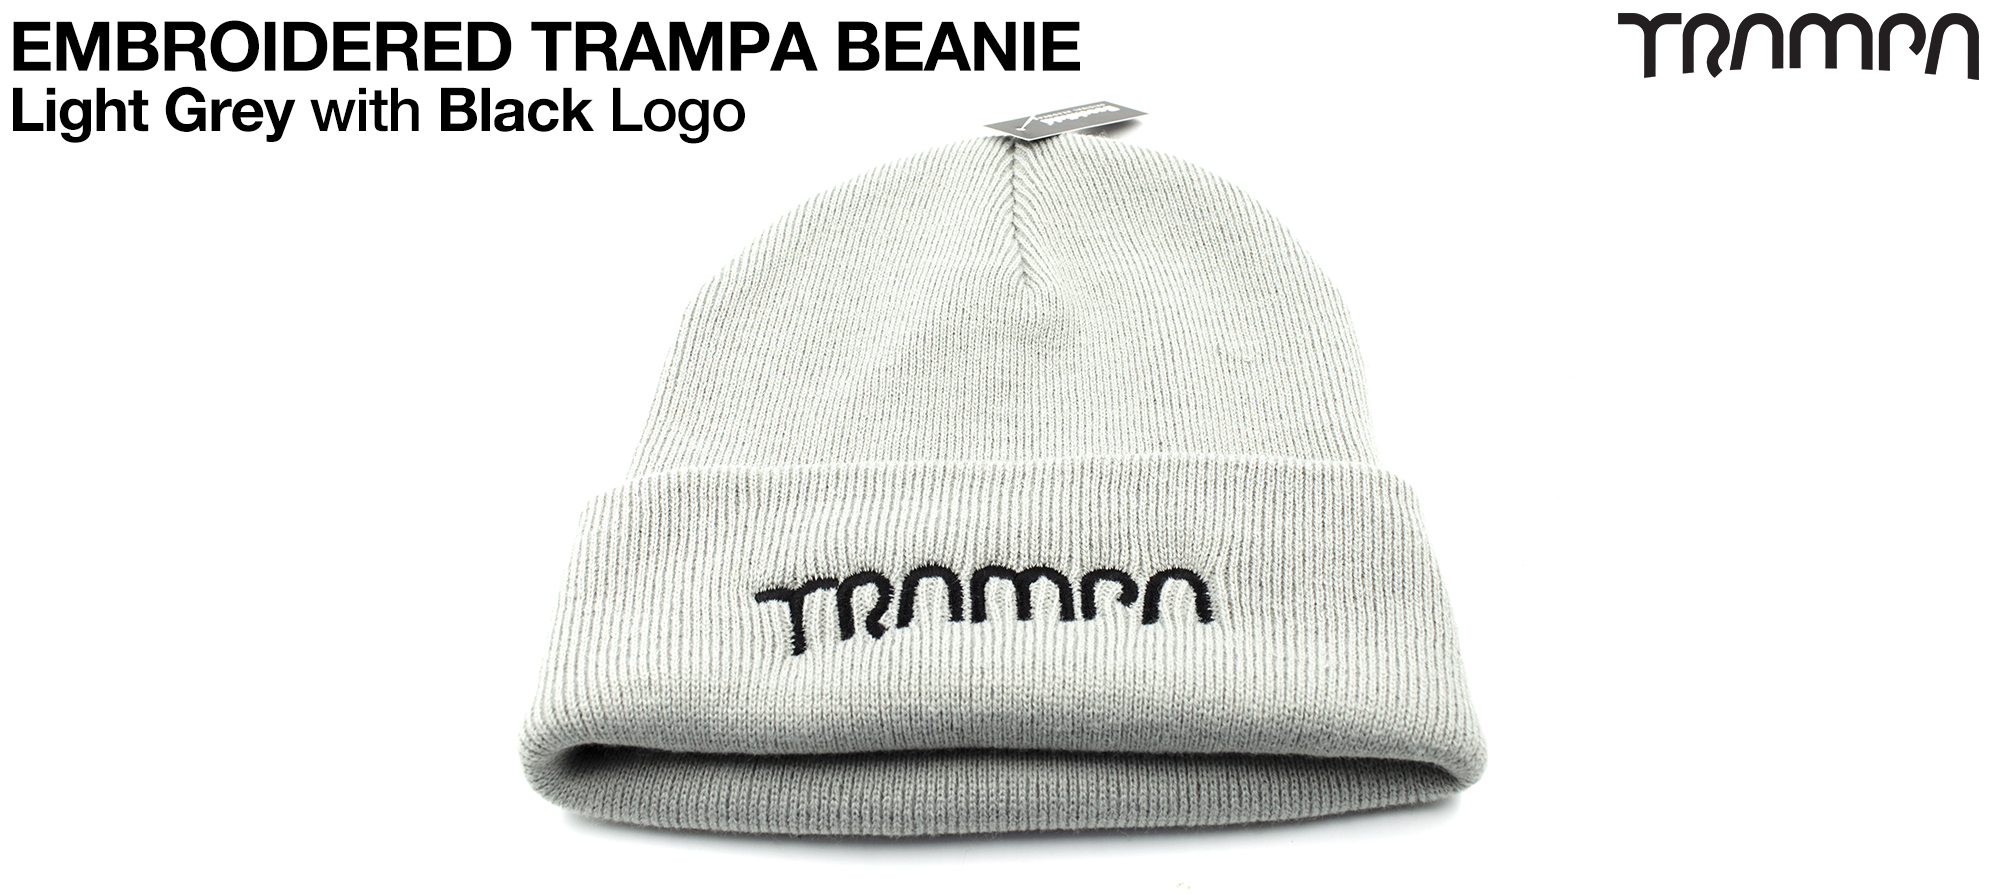 Marl GREY Woolly hat with Black TRAMPA logo